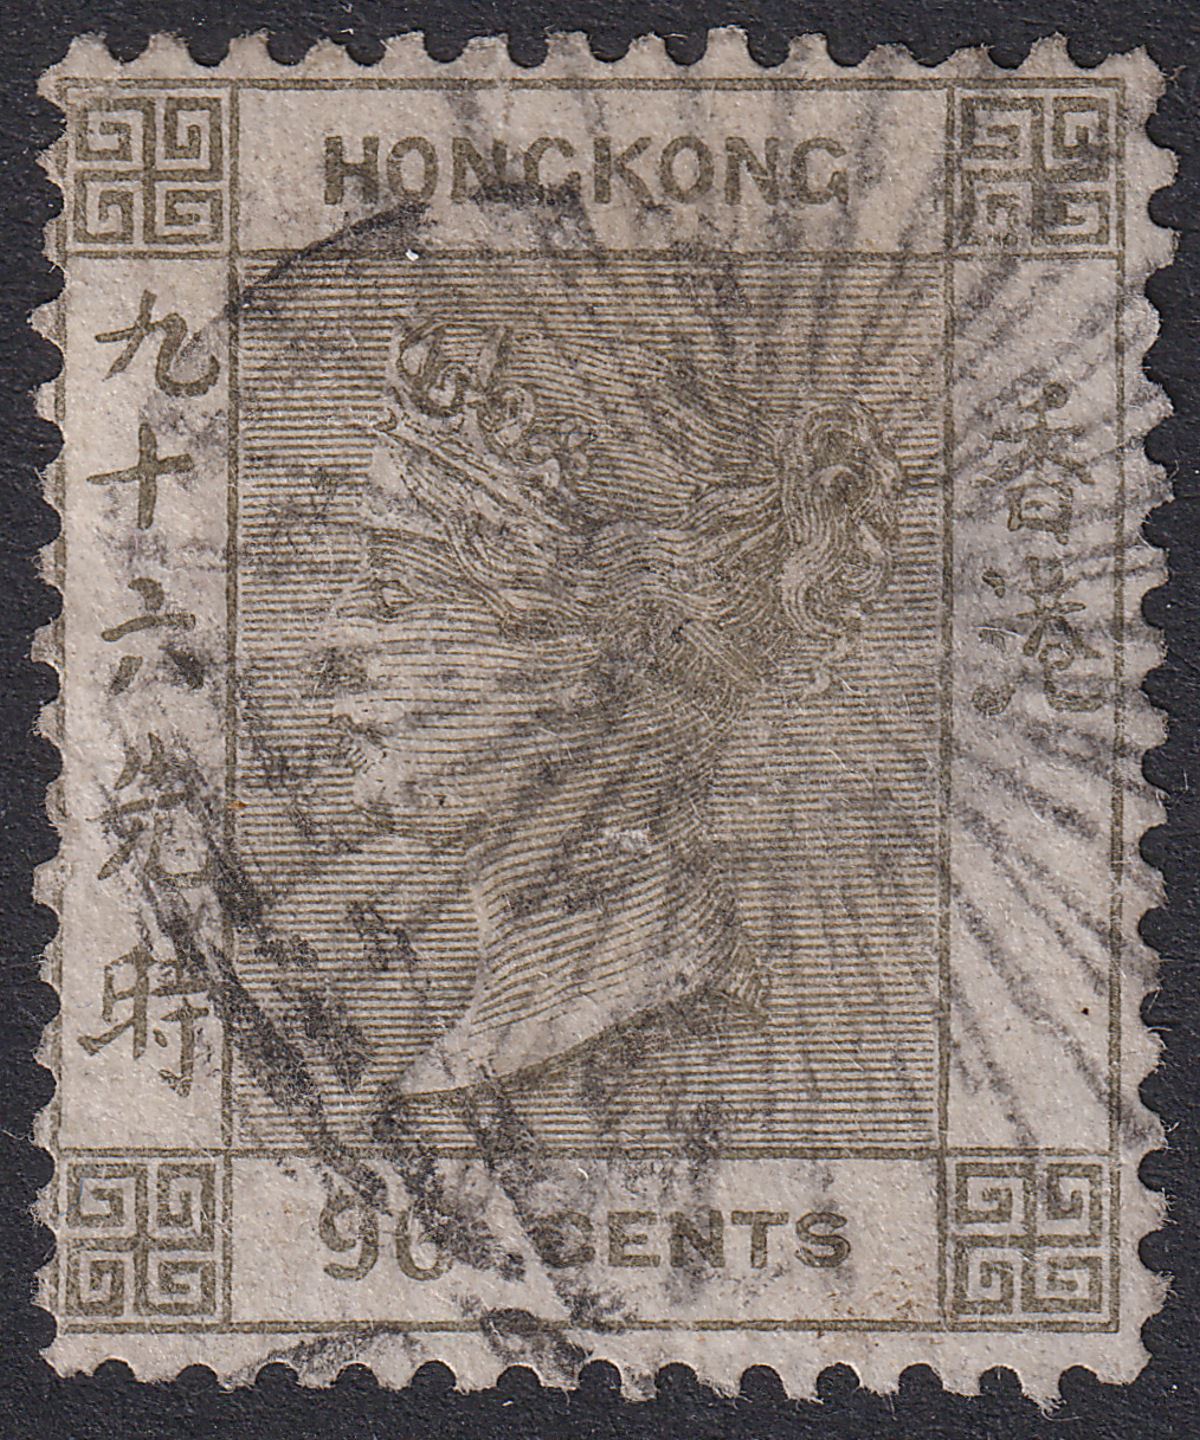 Hong Kong 1863 QV 96c Used with Shanghai Black Sunburst Postmark + B62 SG Z783